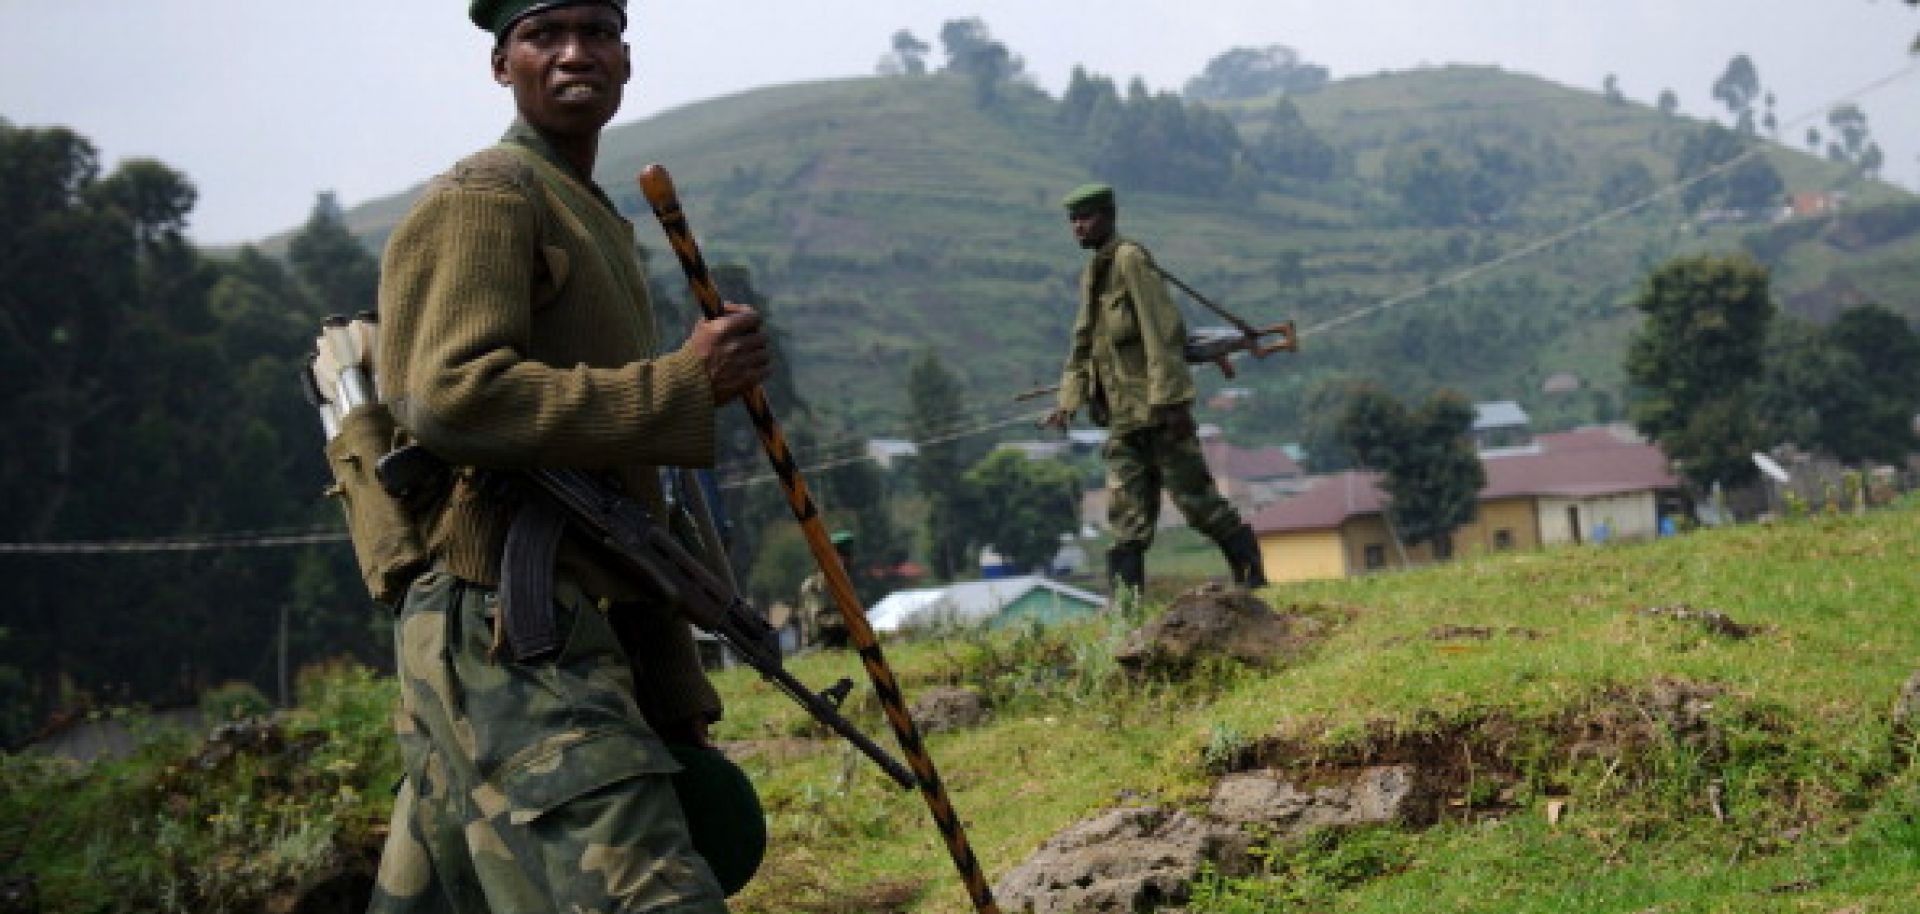 Uganda's Strategic Interests in the Democratic Republic of the Congo